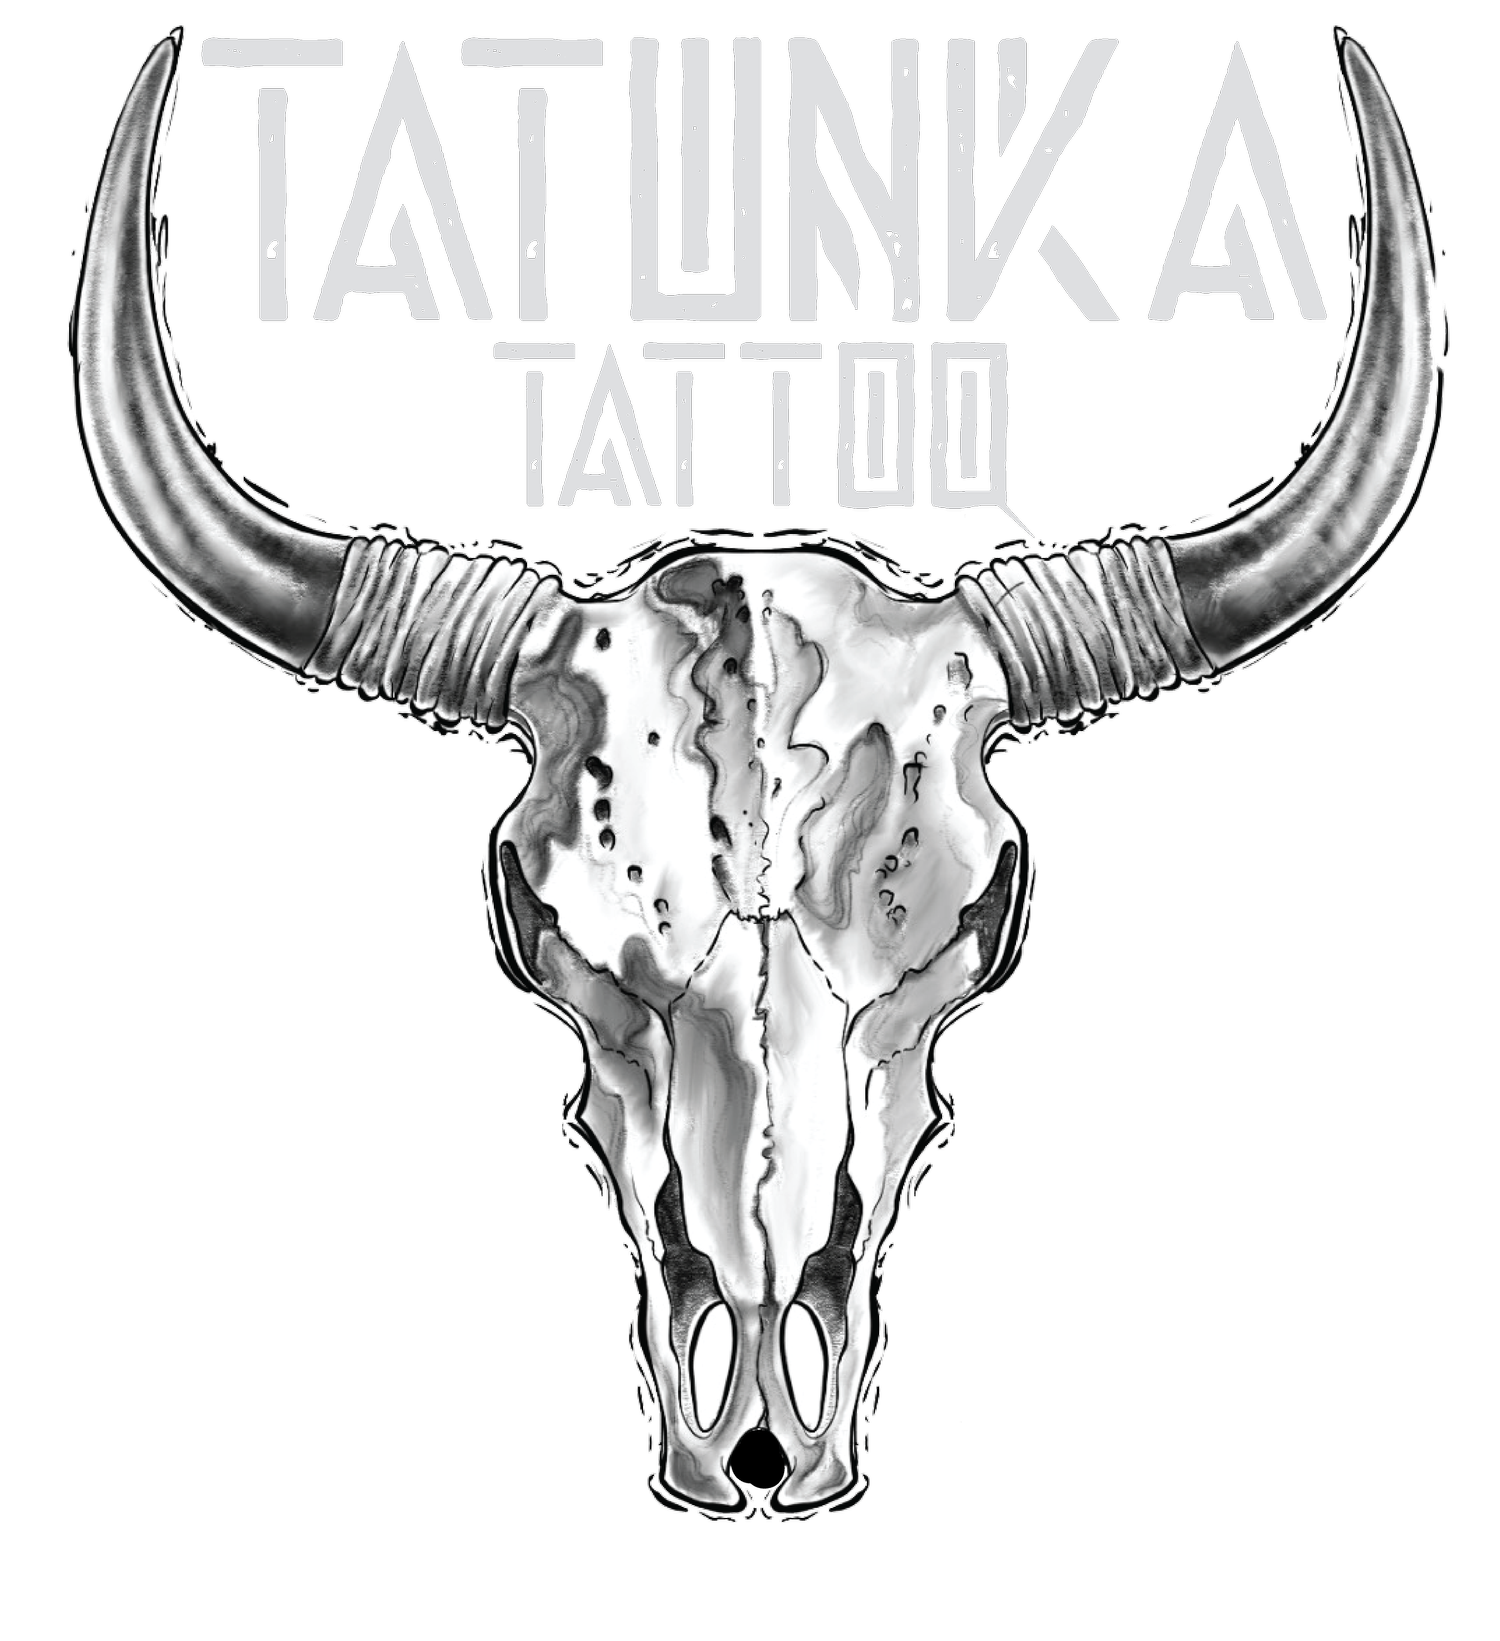 Tatunka Tattoo South Royalton Vt, NH tattoos, new england tattoos, tattoos near me, vermont tattoos